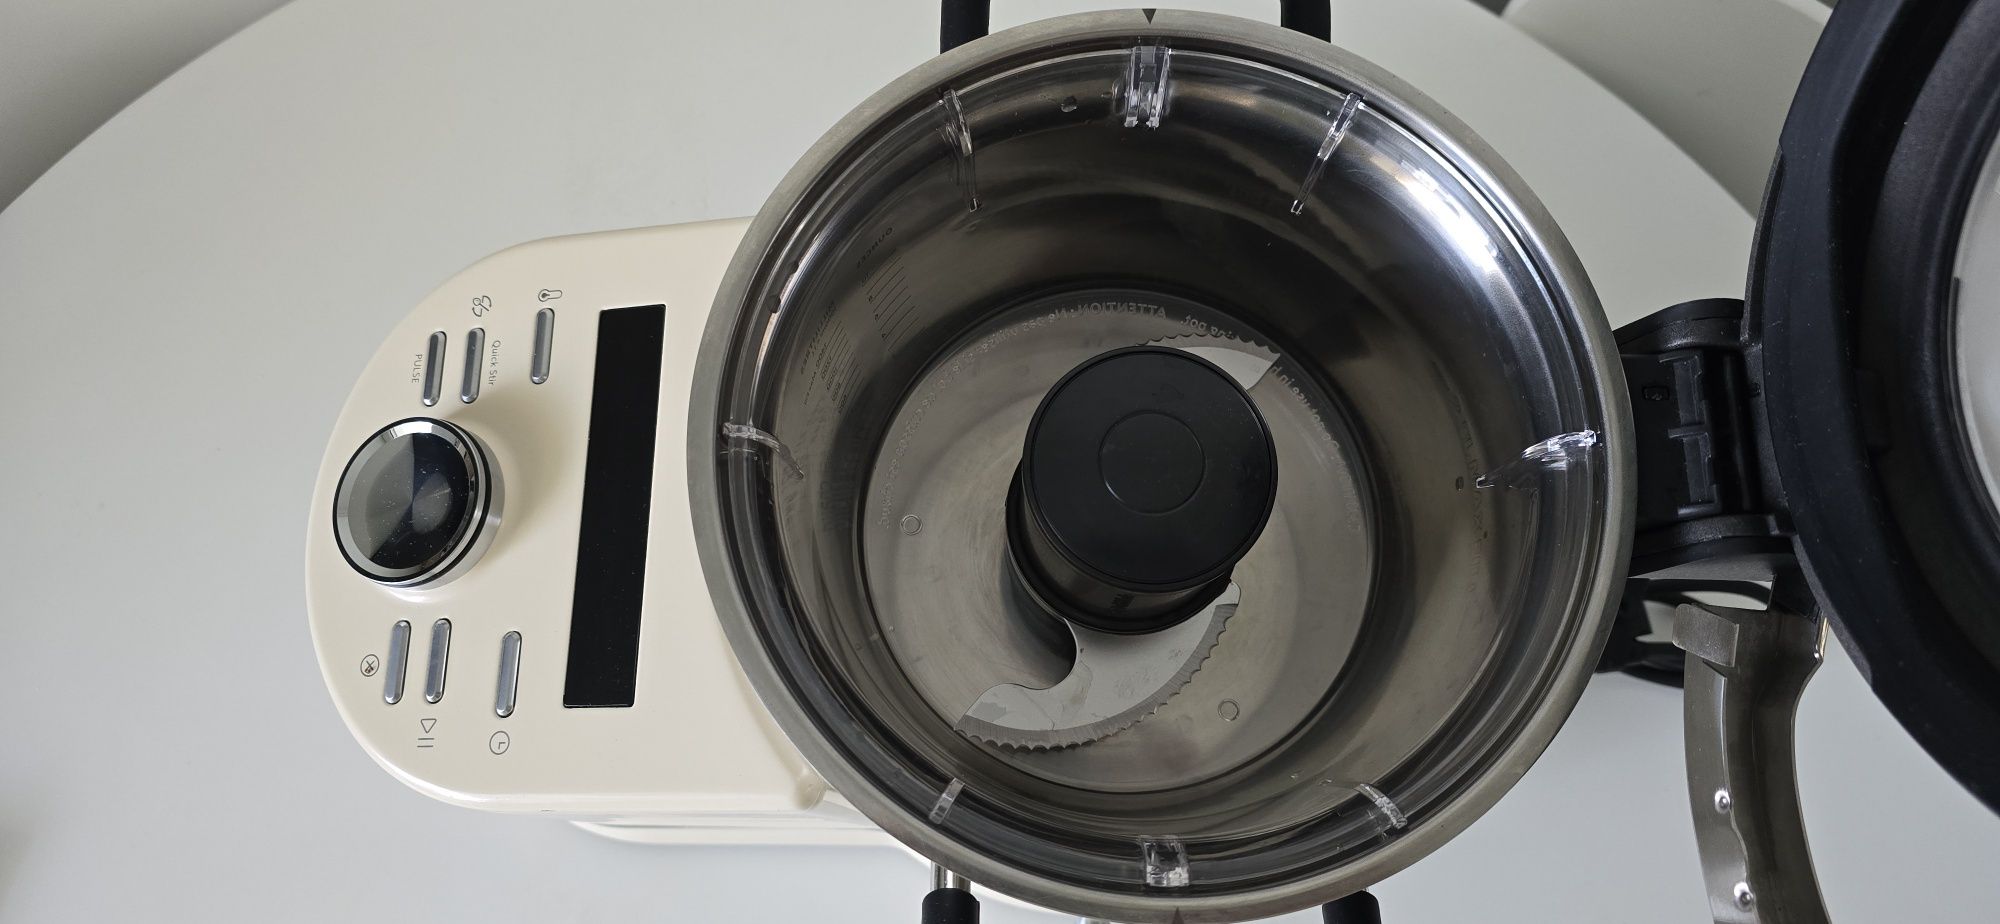 Masina de gatit KitchenAid Artisan Multicooker